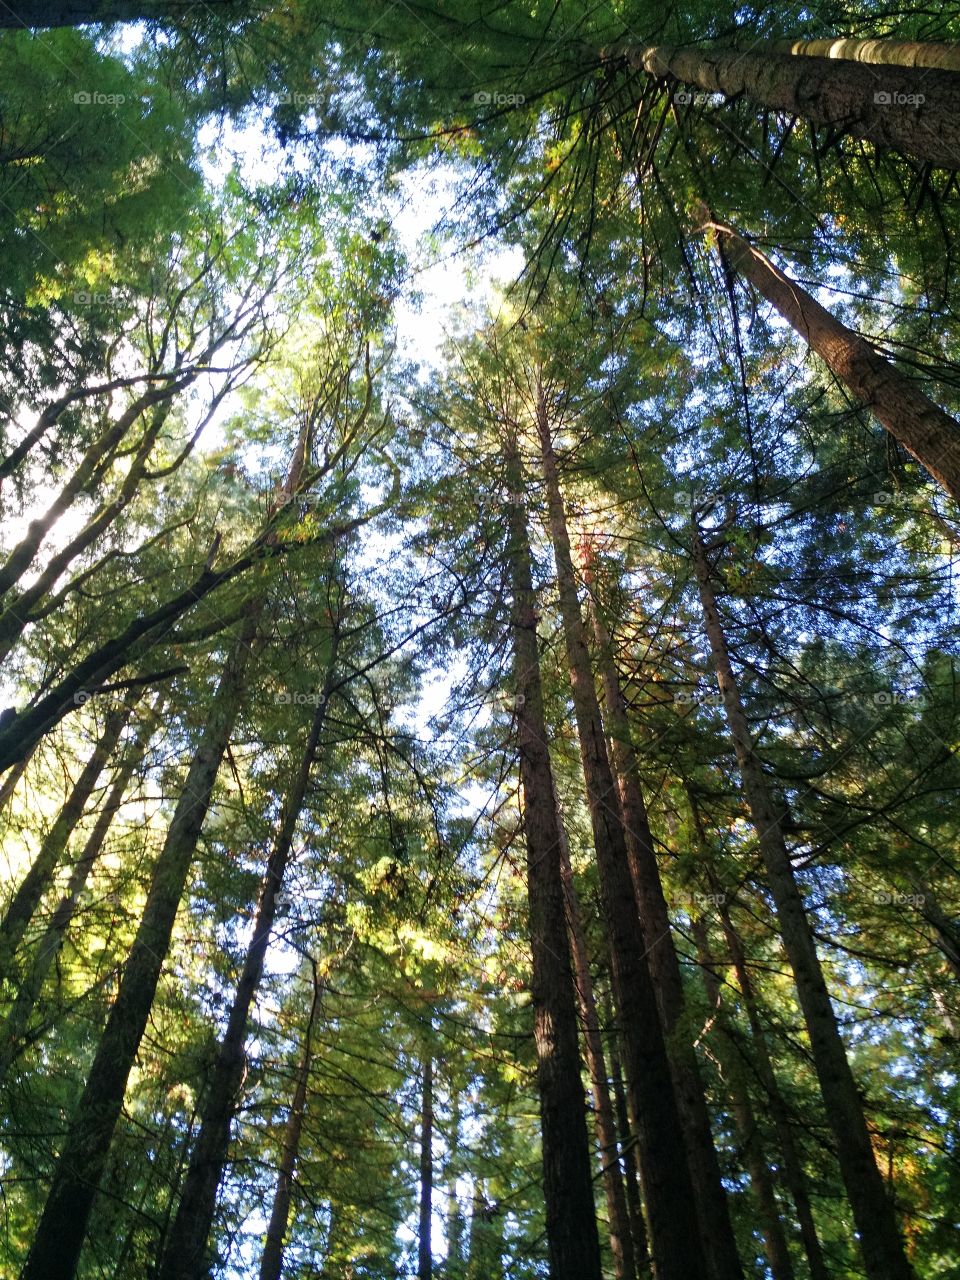 Humbolt Redwoods. California